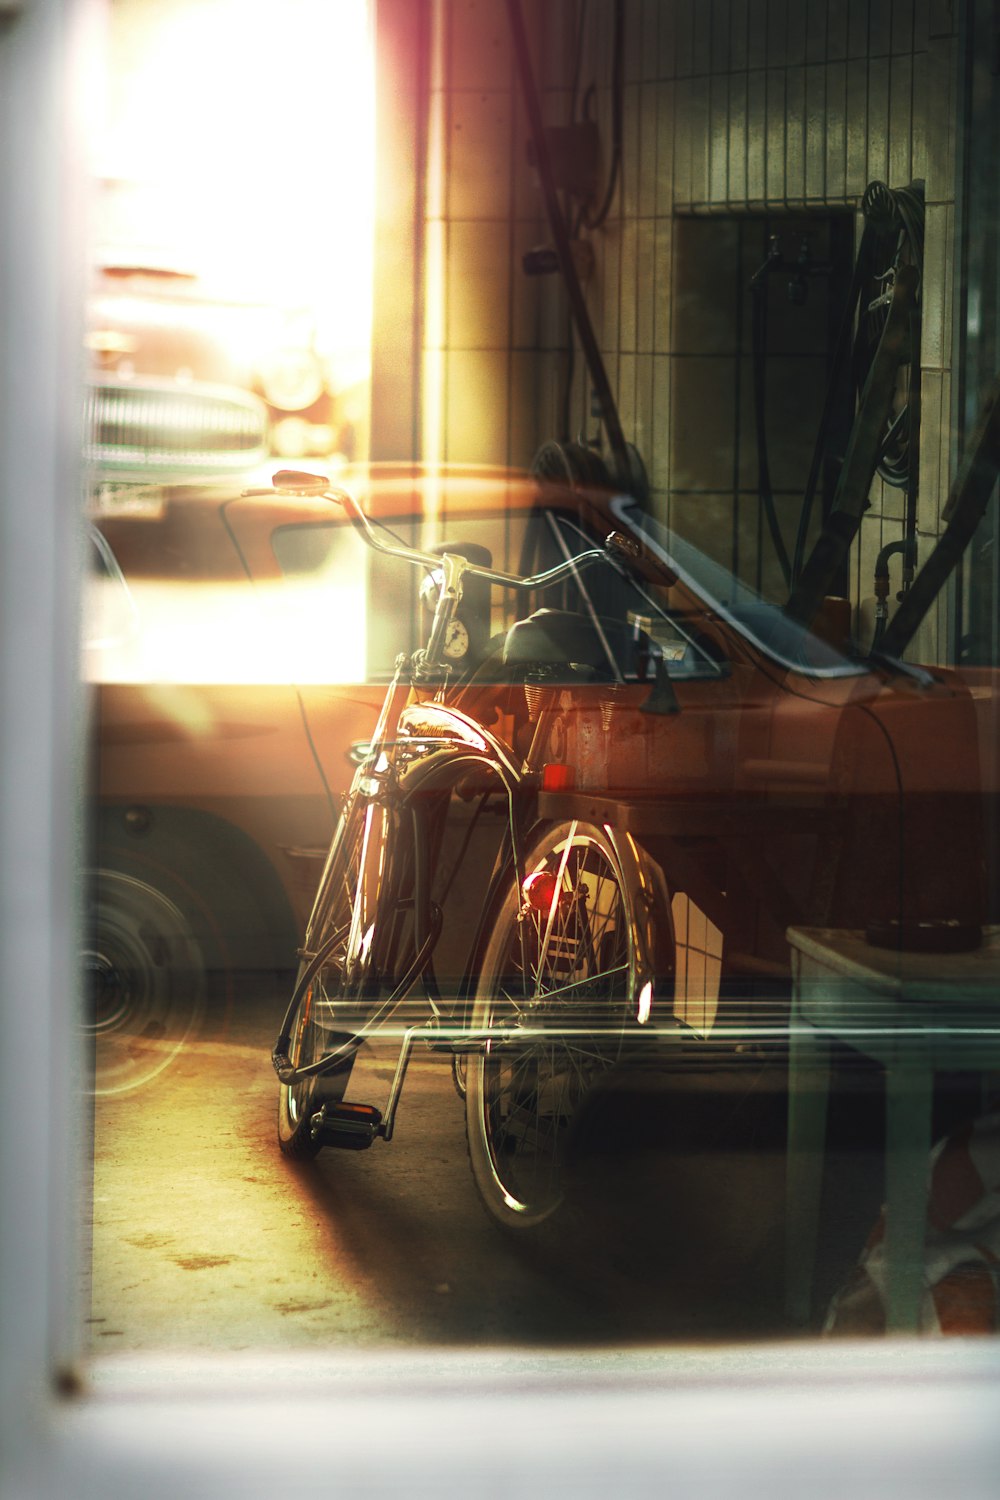 Bicicleta de carretera gris y negra estacionada junto a la pared que supervisa la ventana de vidrio